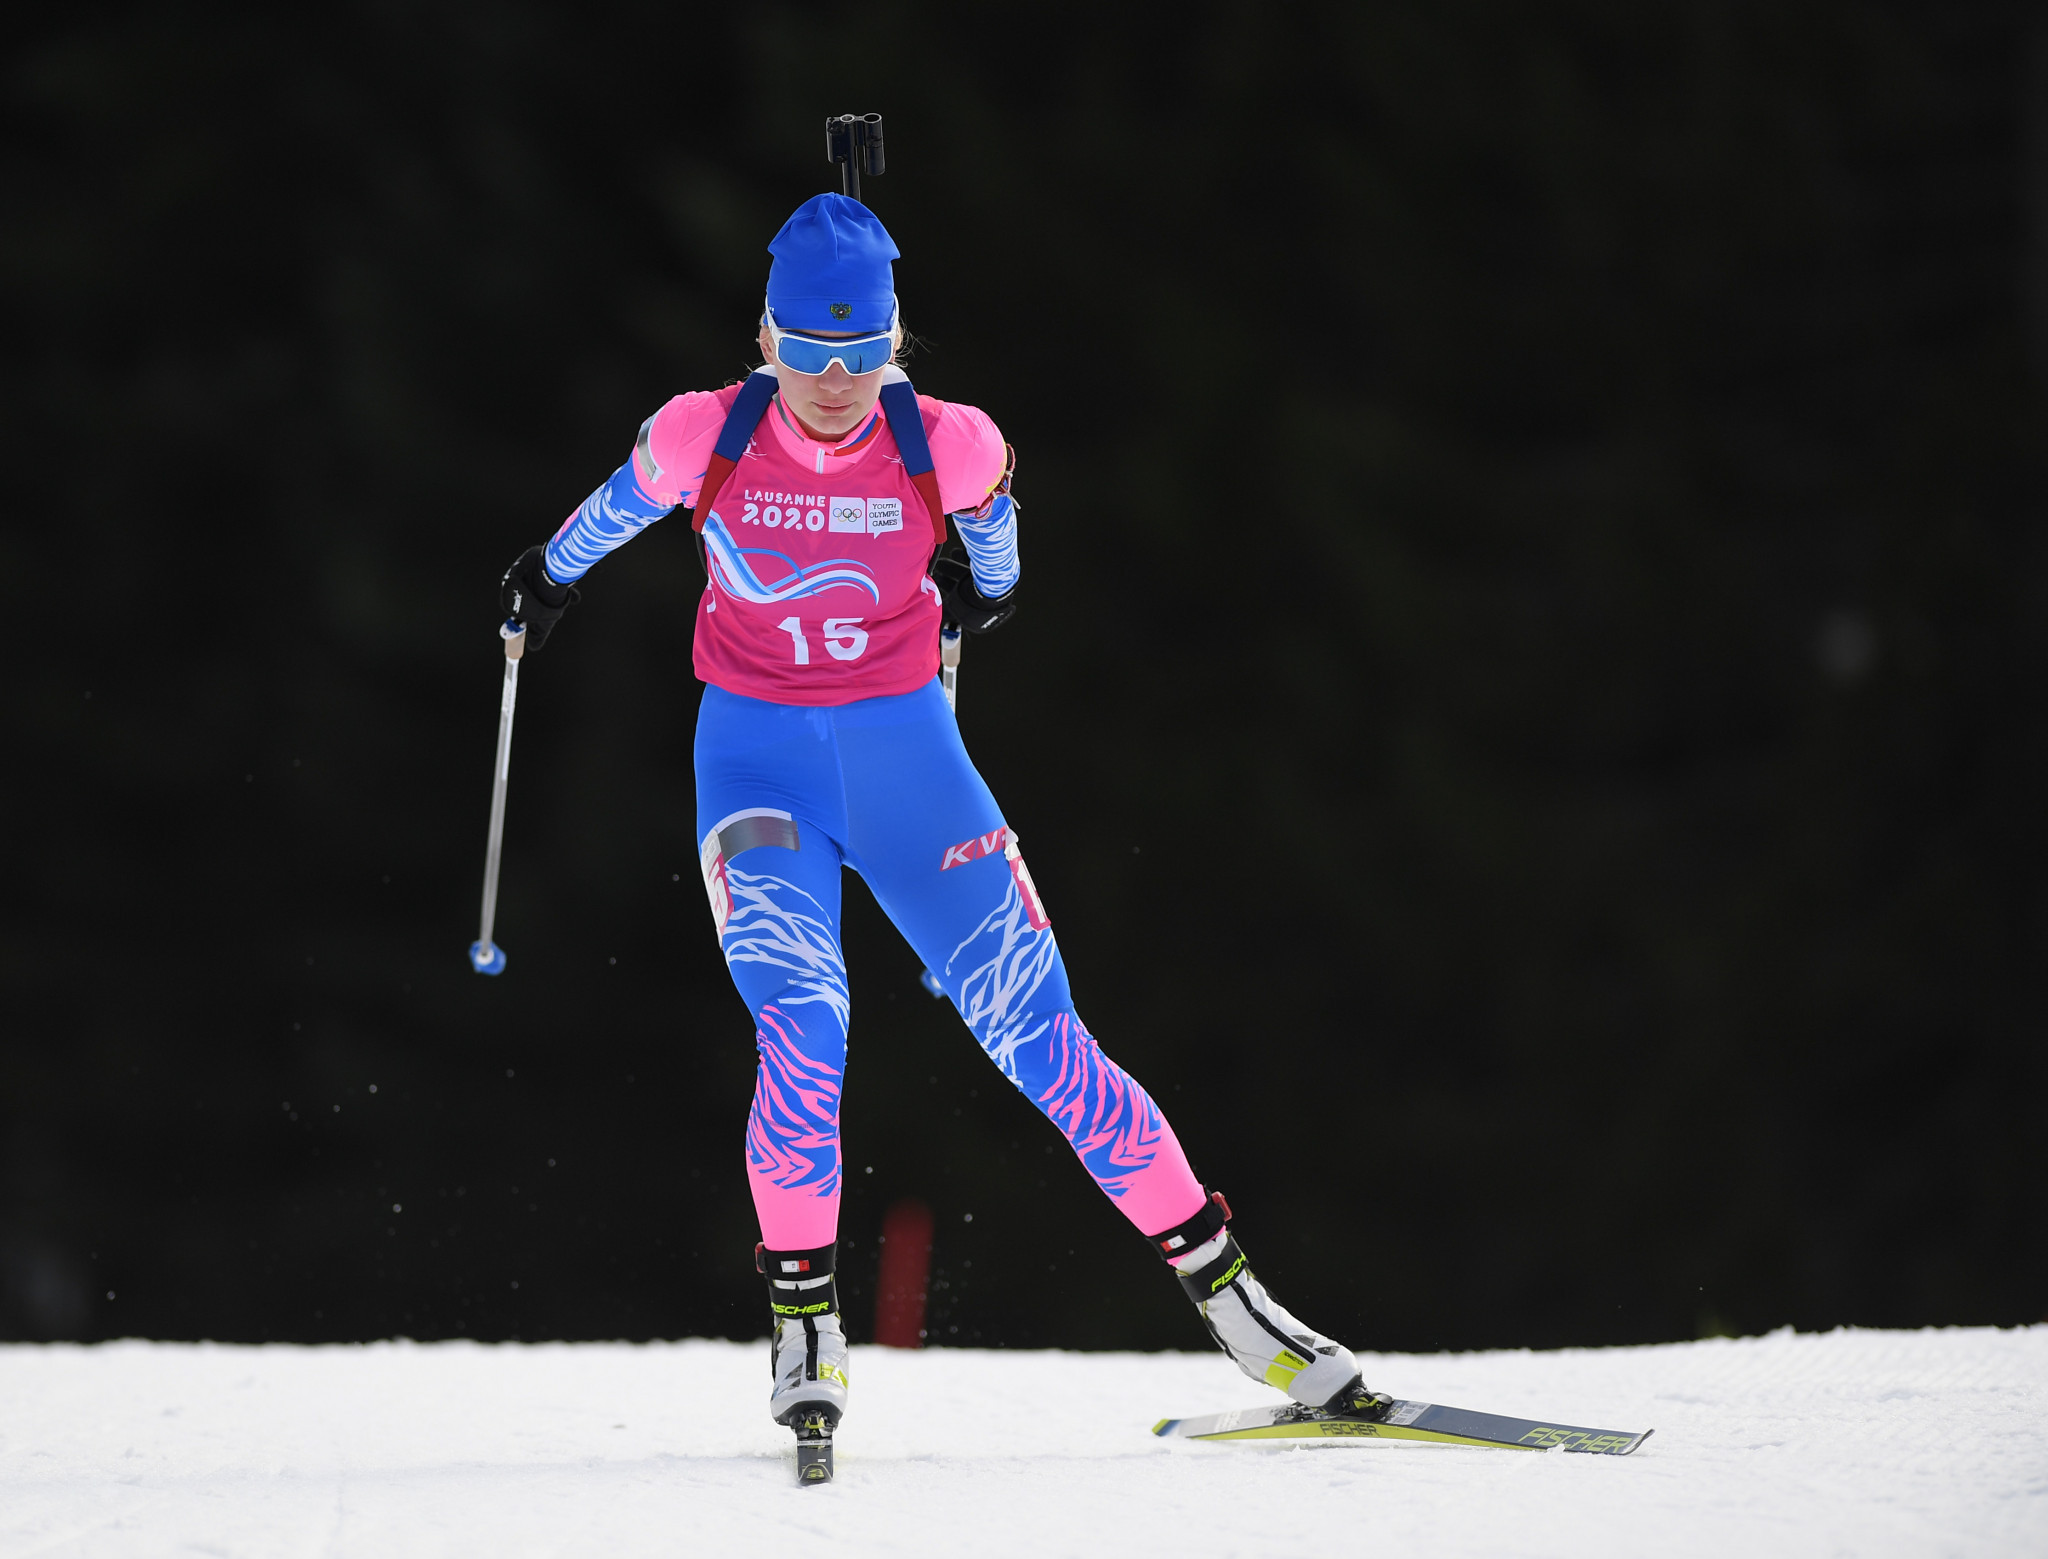 Mokhova clinches second biathlon gold with sprint triumph at Lausanne 2020